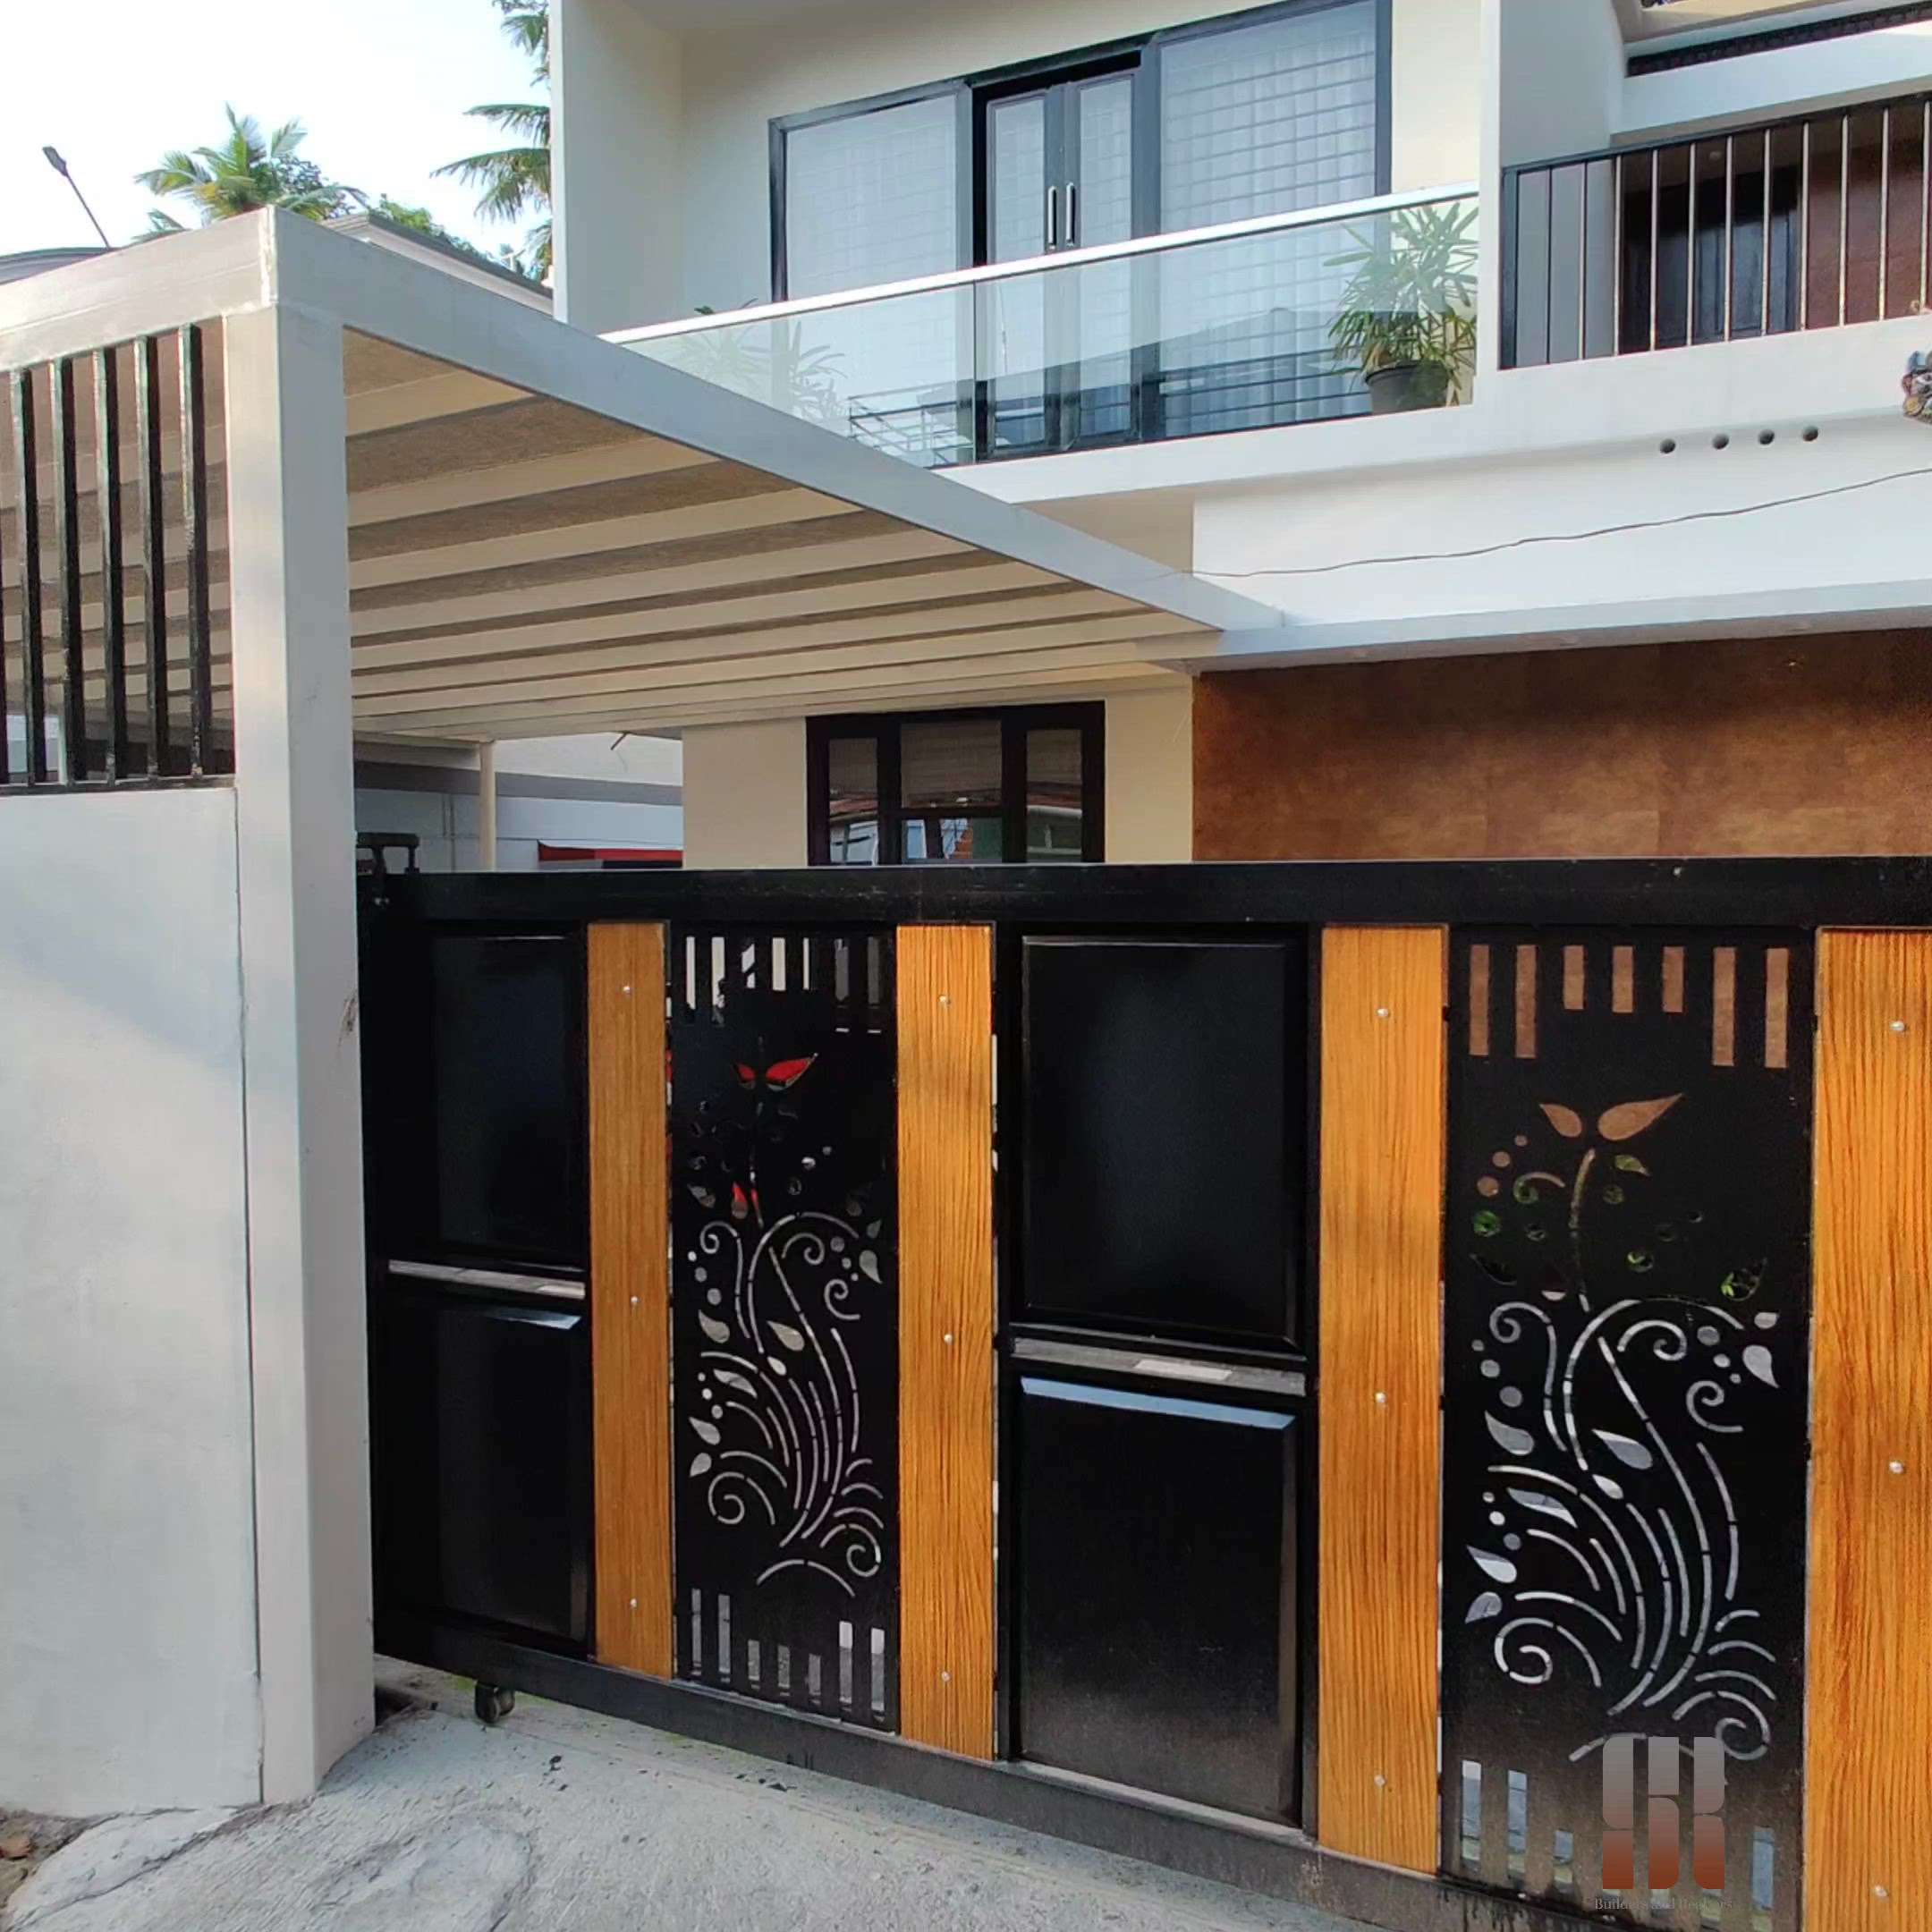 #KeralaStyleHouse #patio #homeplanners #HouseDesigns #InteriorDesigner #ContemporaryHouse #SmallHouse #ModularKitchen #Architectural&Interior #architecturedesigns #Architect #CivilEngineer #civilcontractors  ##KeralaStyleHouse #patio #homeplanners #HouseDesigns #InteriorDesigner #ContemporaryHouse #SmallHouse #ModularKitchen #Architectural&Interior #architecturedesigns #Architect #CivilEngineer #CivilContractor